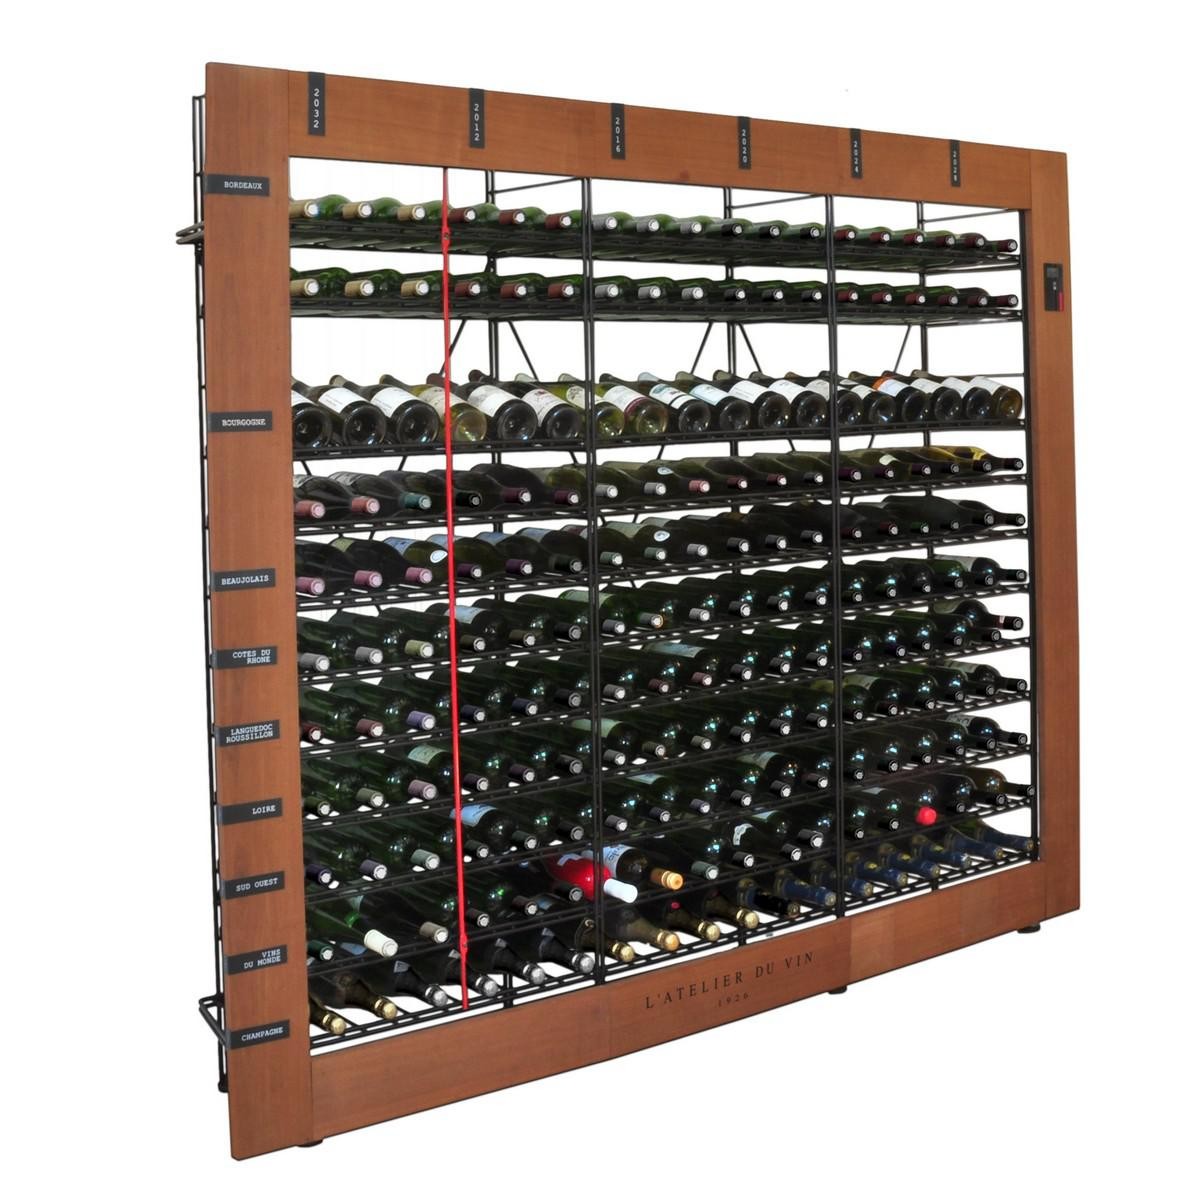 professional_wine_rack_smart_cellars_l_atelier_du_vin_22_